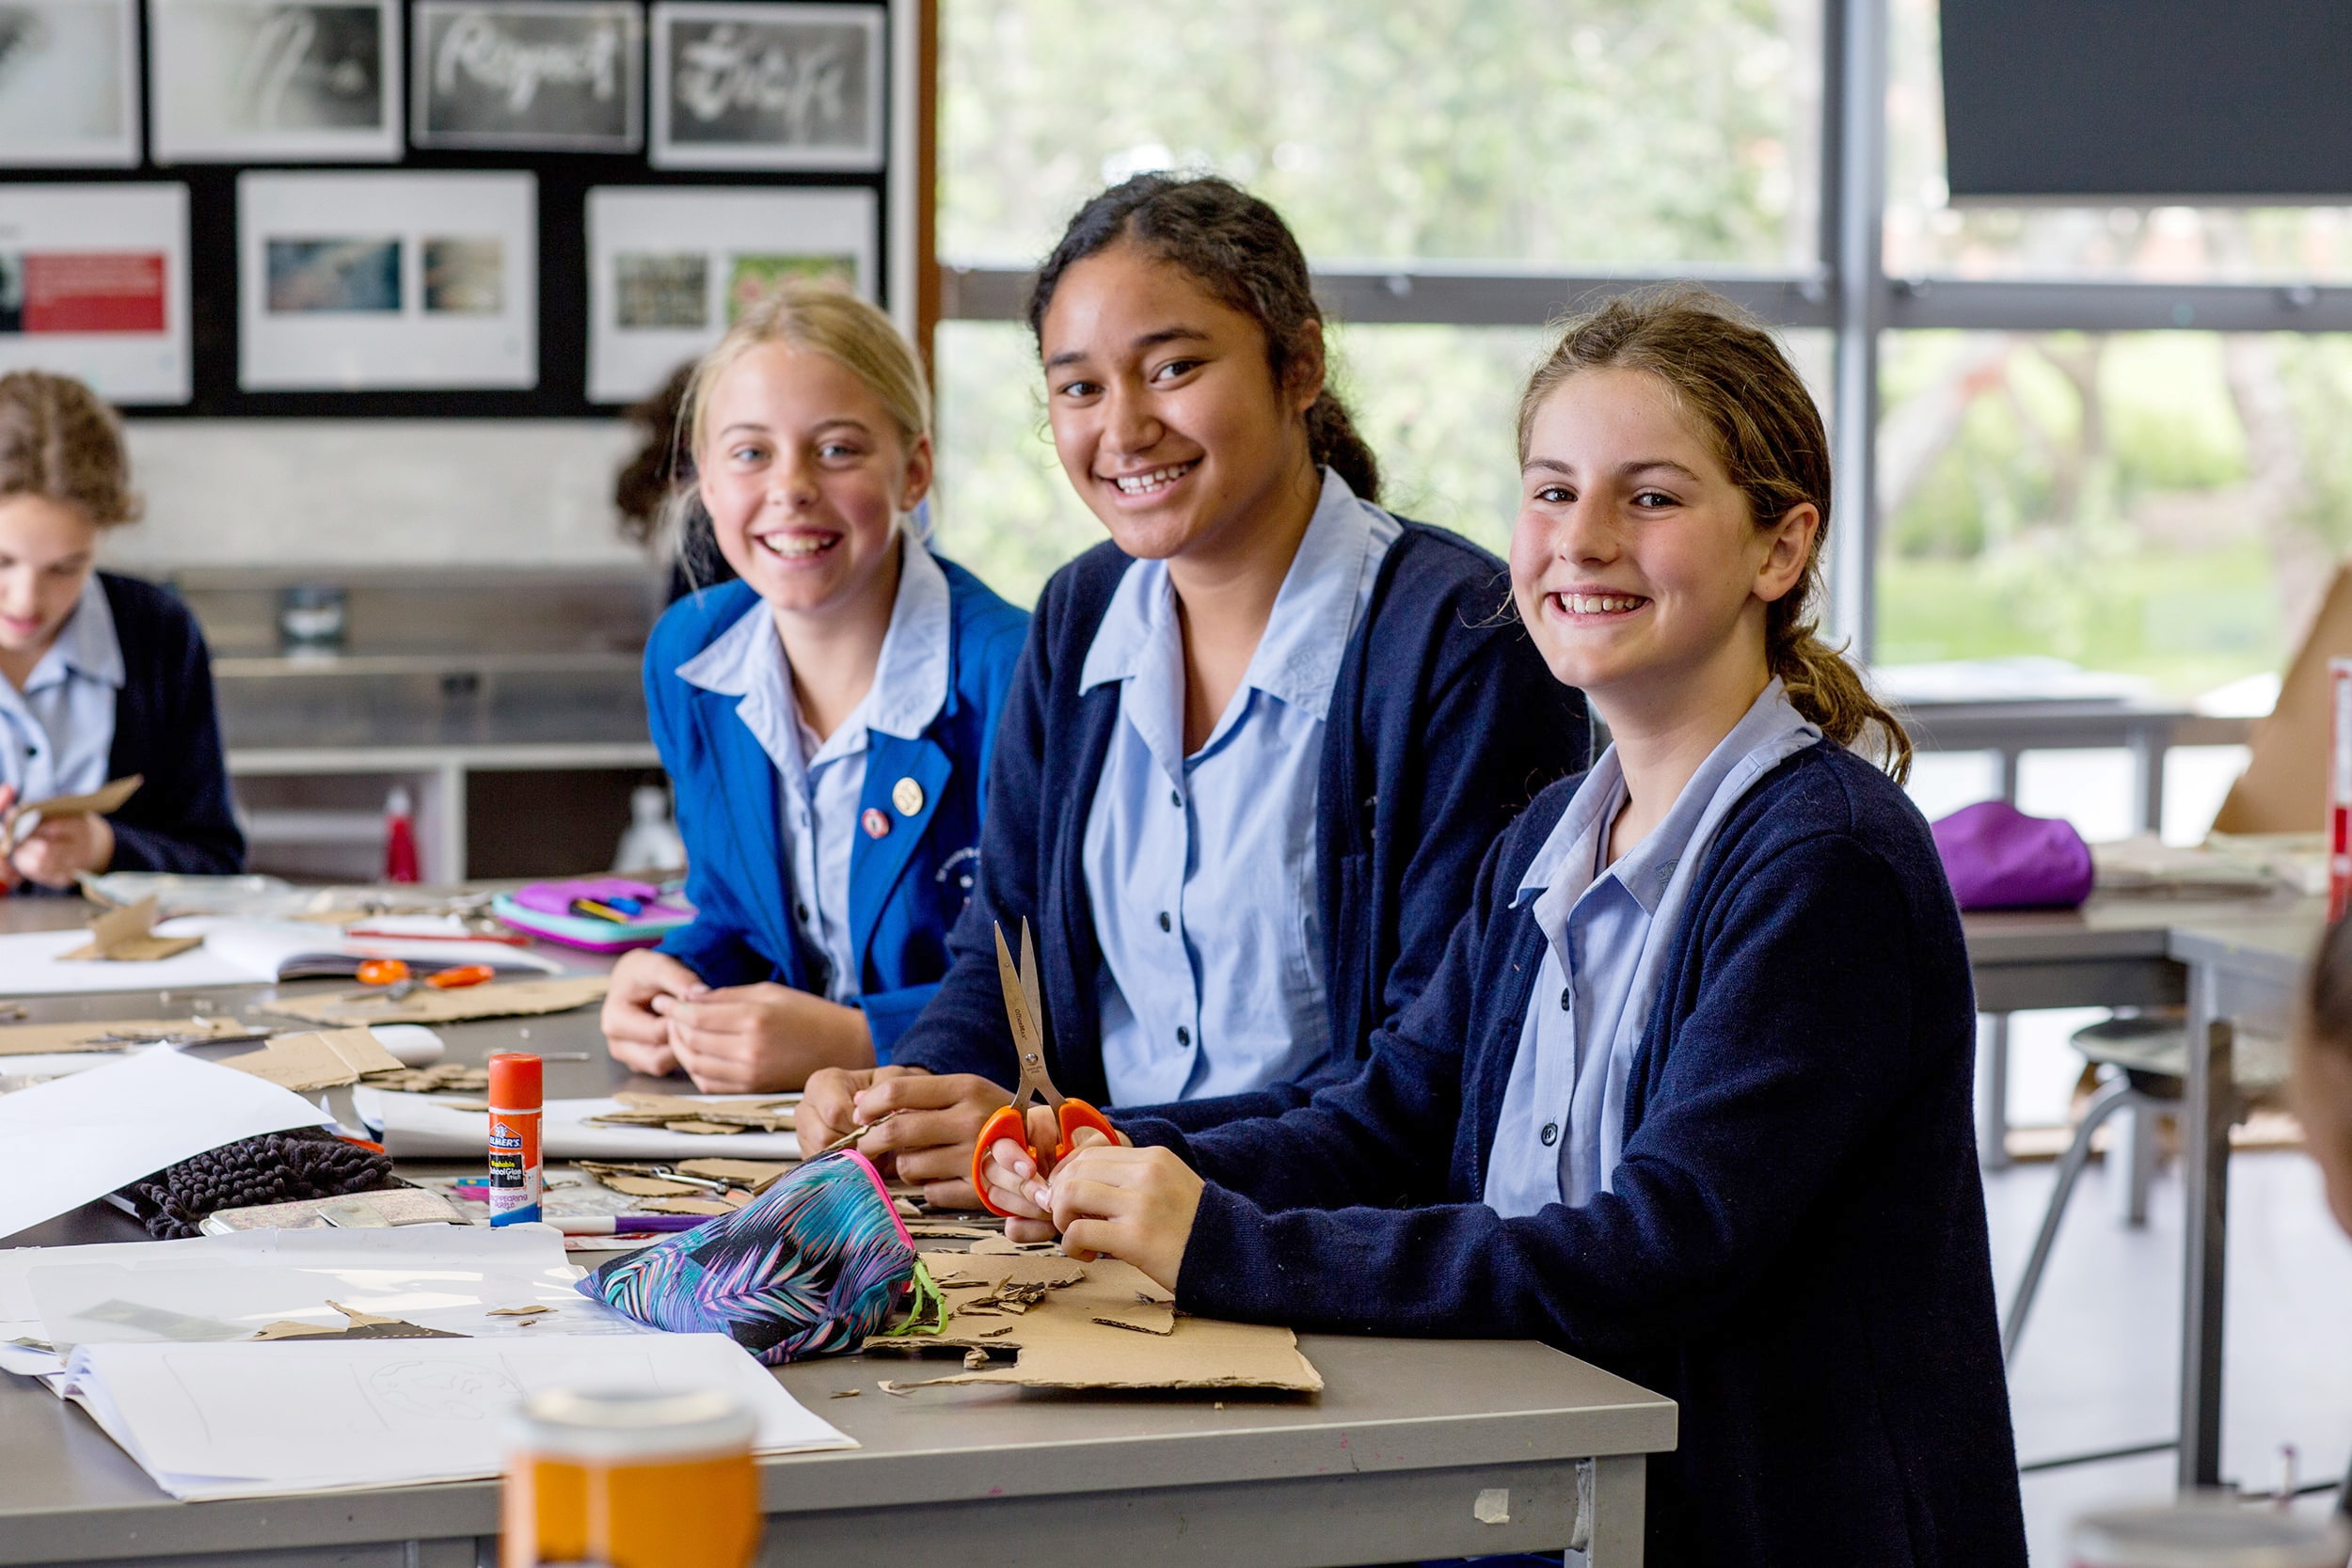 St_Mary_s_College_New_Zealand_โรงเรียนมัธยมนิวซีแลนด์_เรียนต่อนิวซีเเลนด์